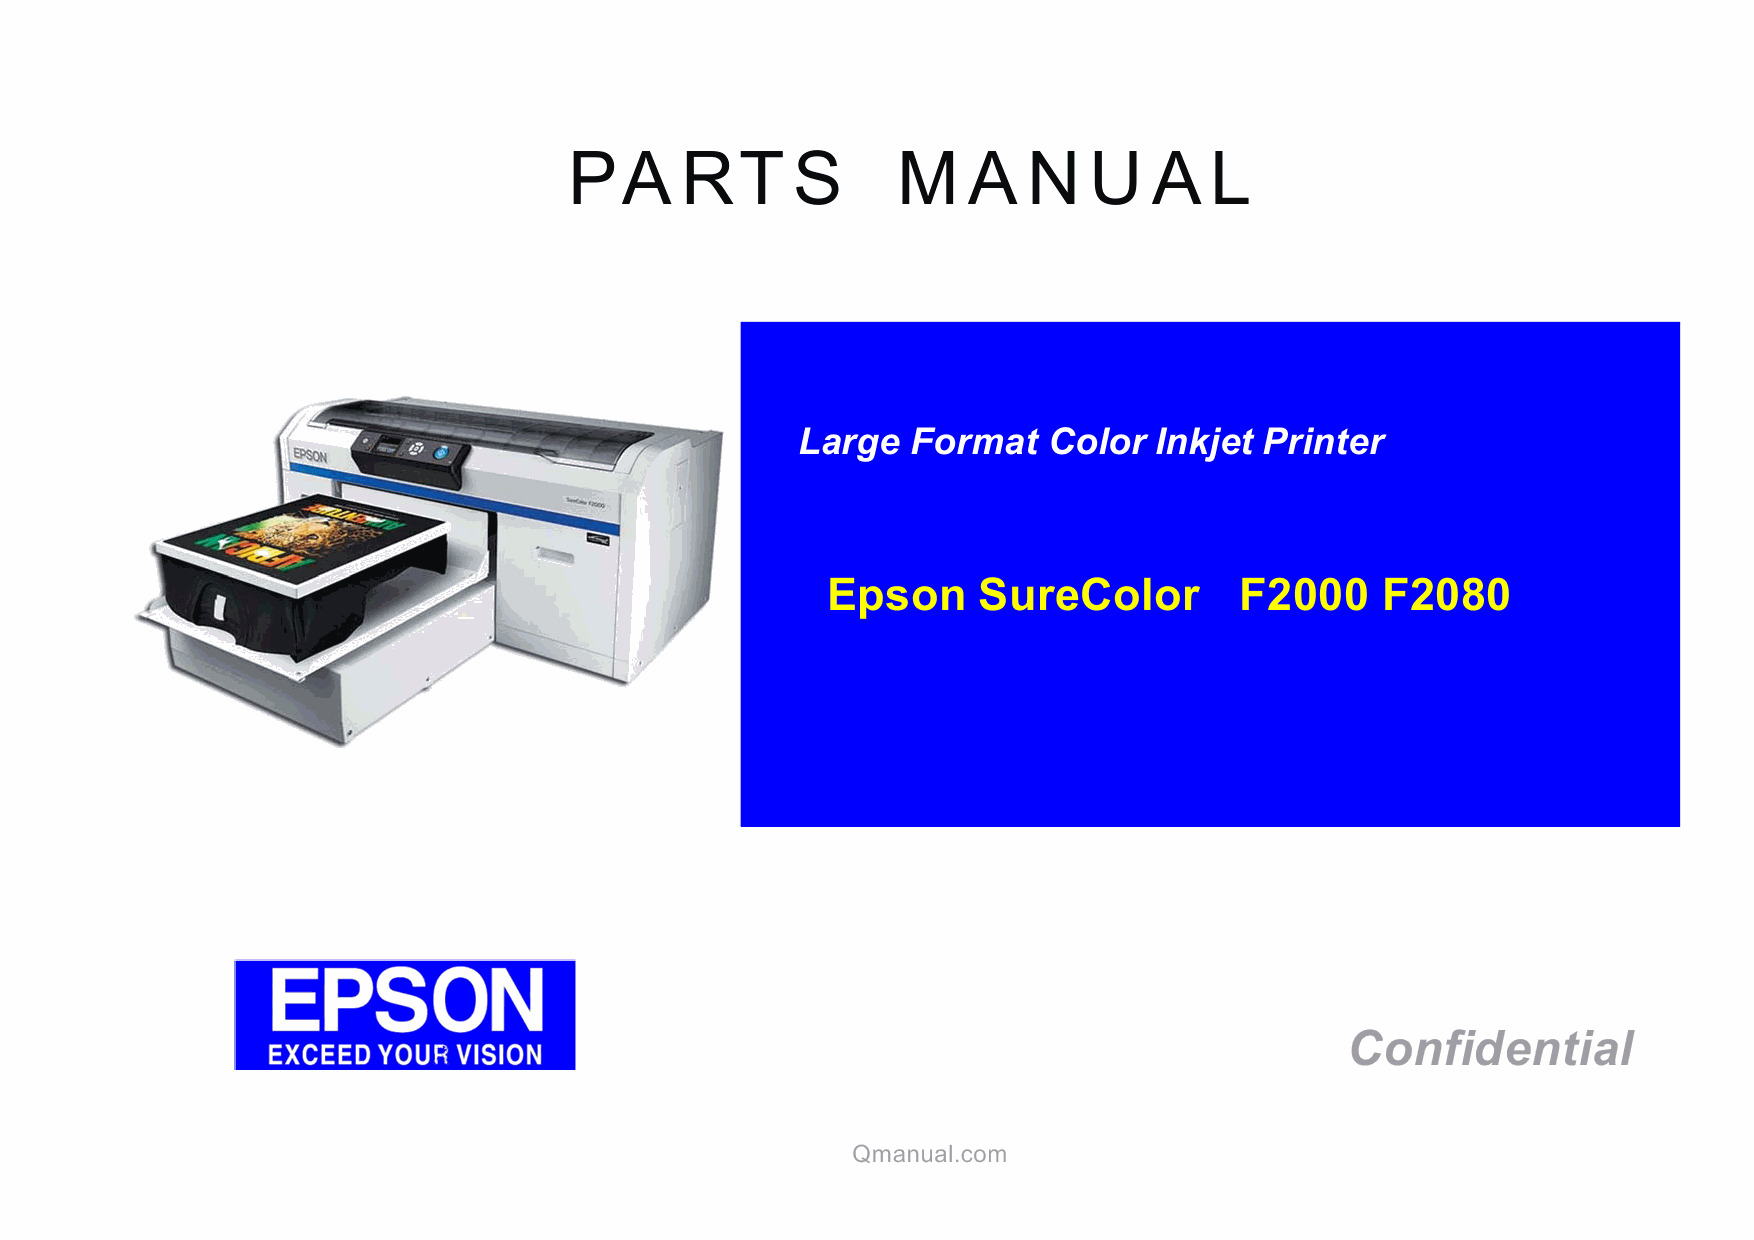 EPSON SureColor F2000 F2080 Parts Manual-1